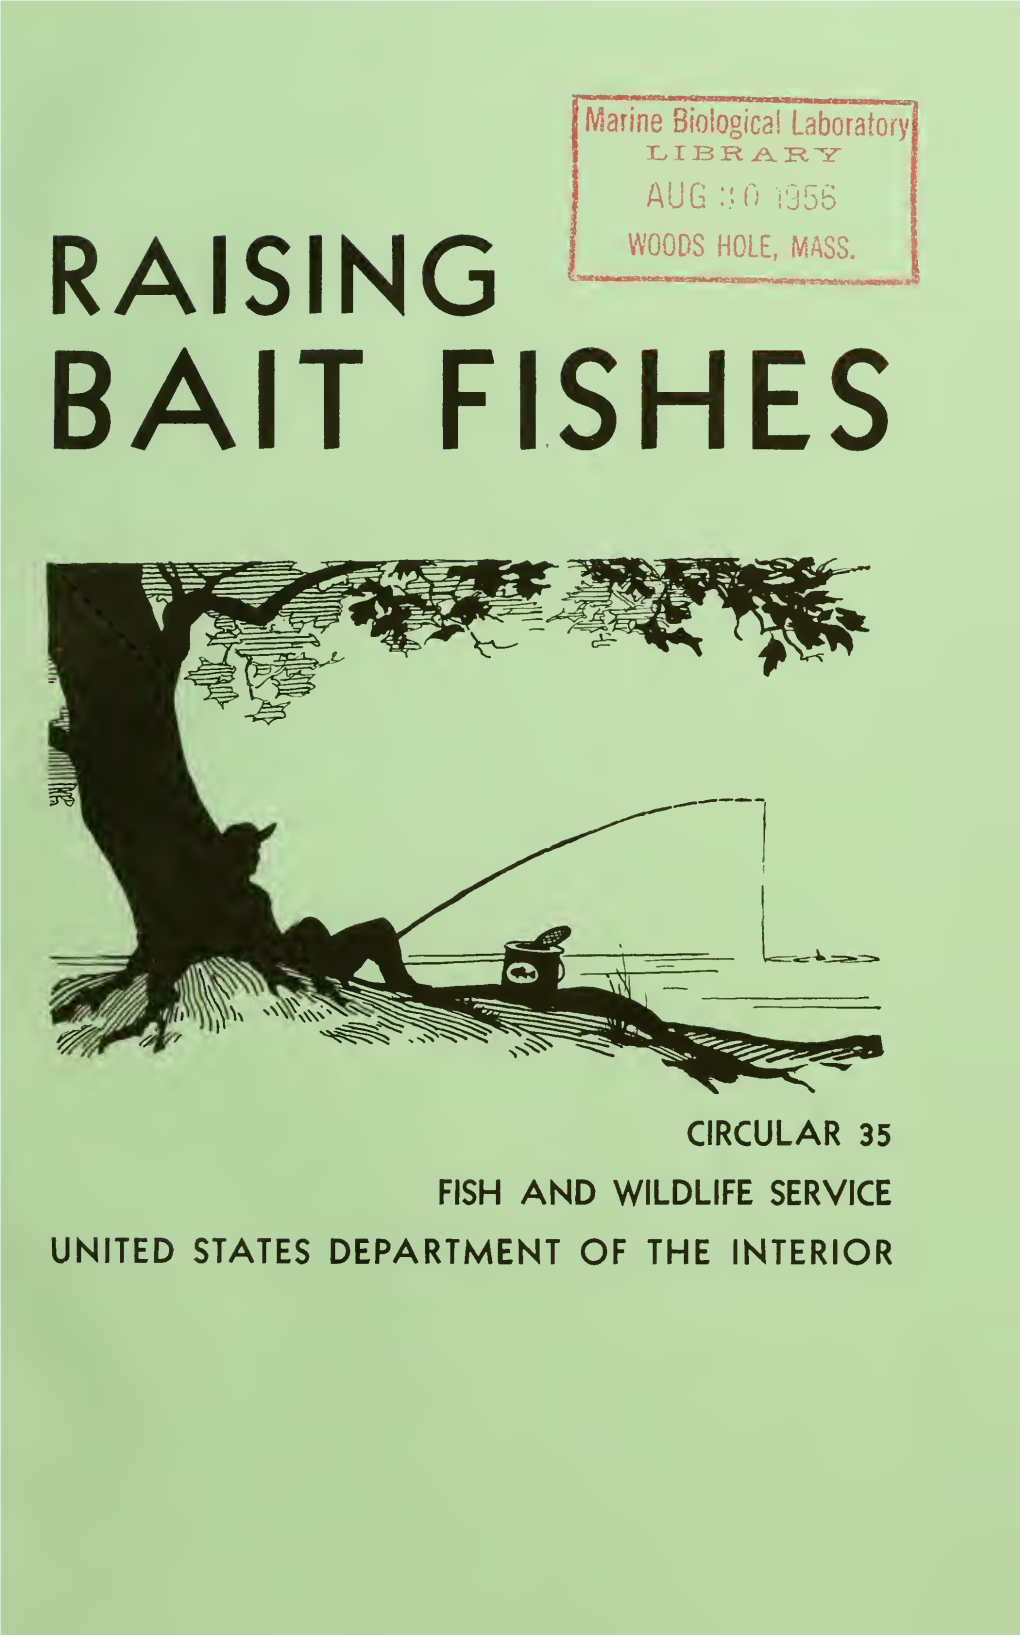 Circular 35. Raising Bait Fishes